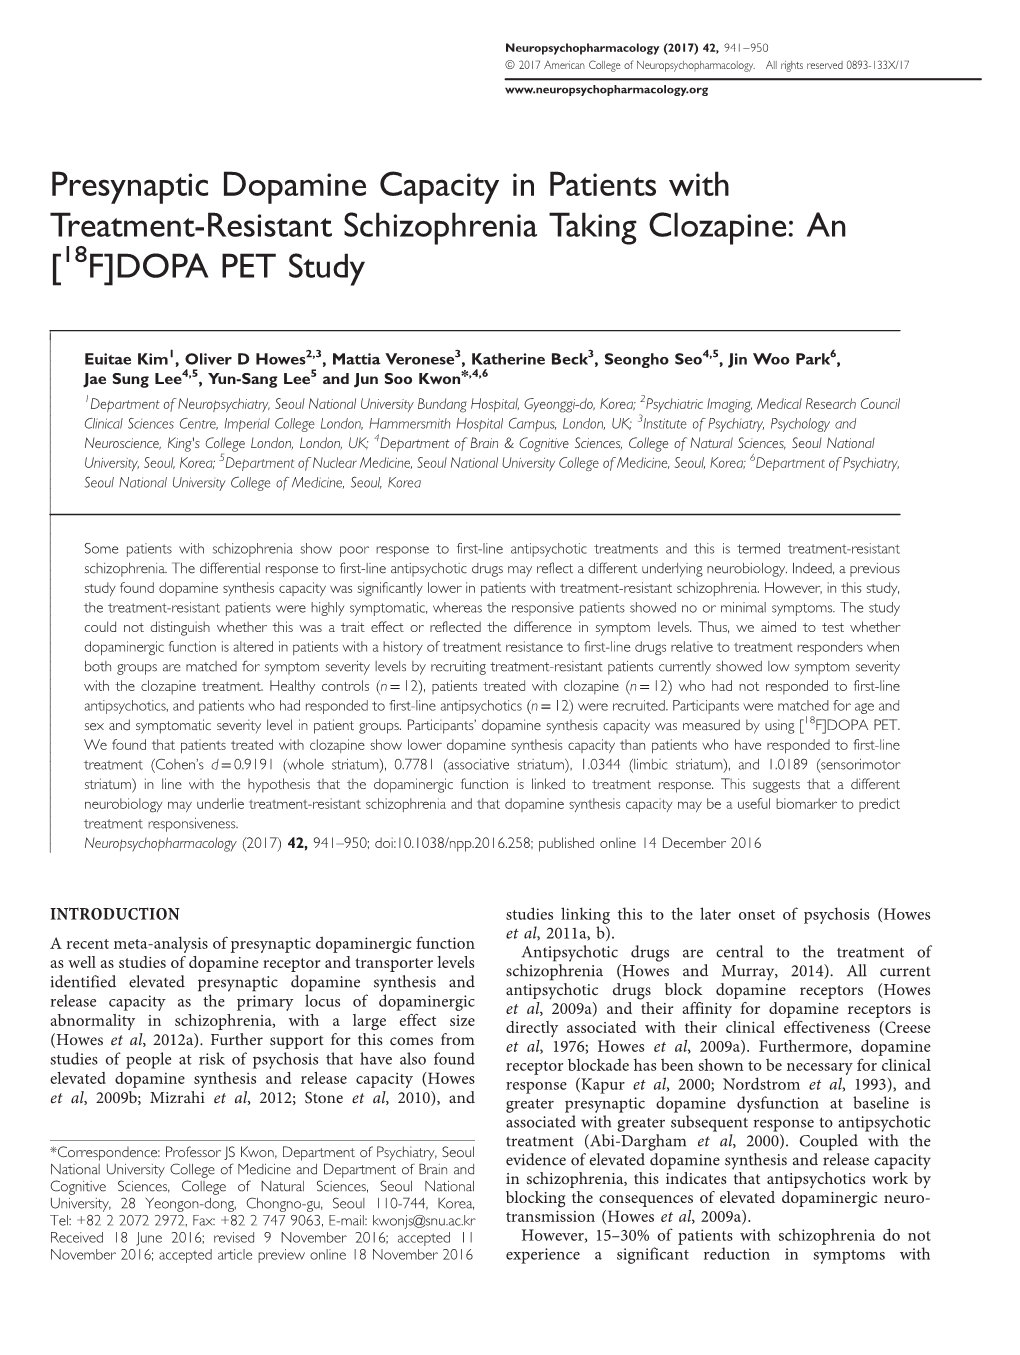 Presynaptic Dopamine Capacity in Patients with Treatment-Resistant Schizophrenia Taking Clozapine: an [18F]DOPA PET Study